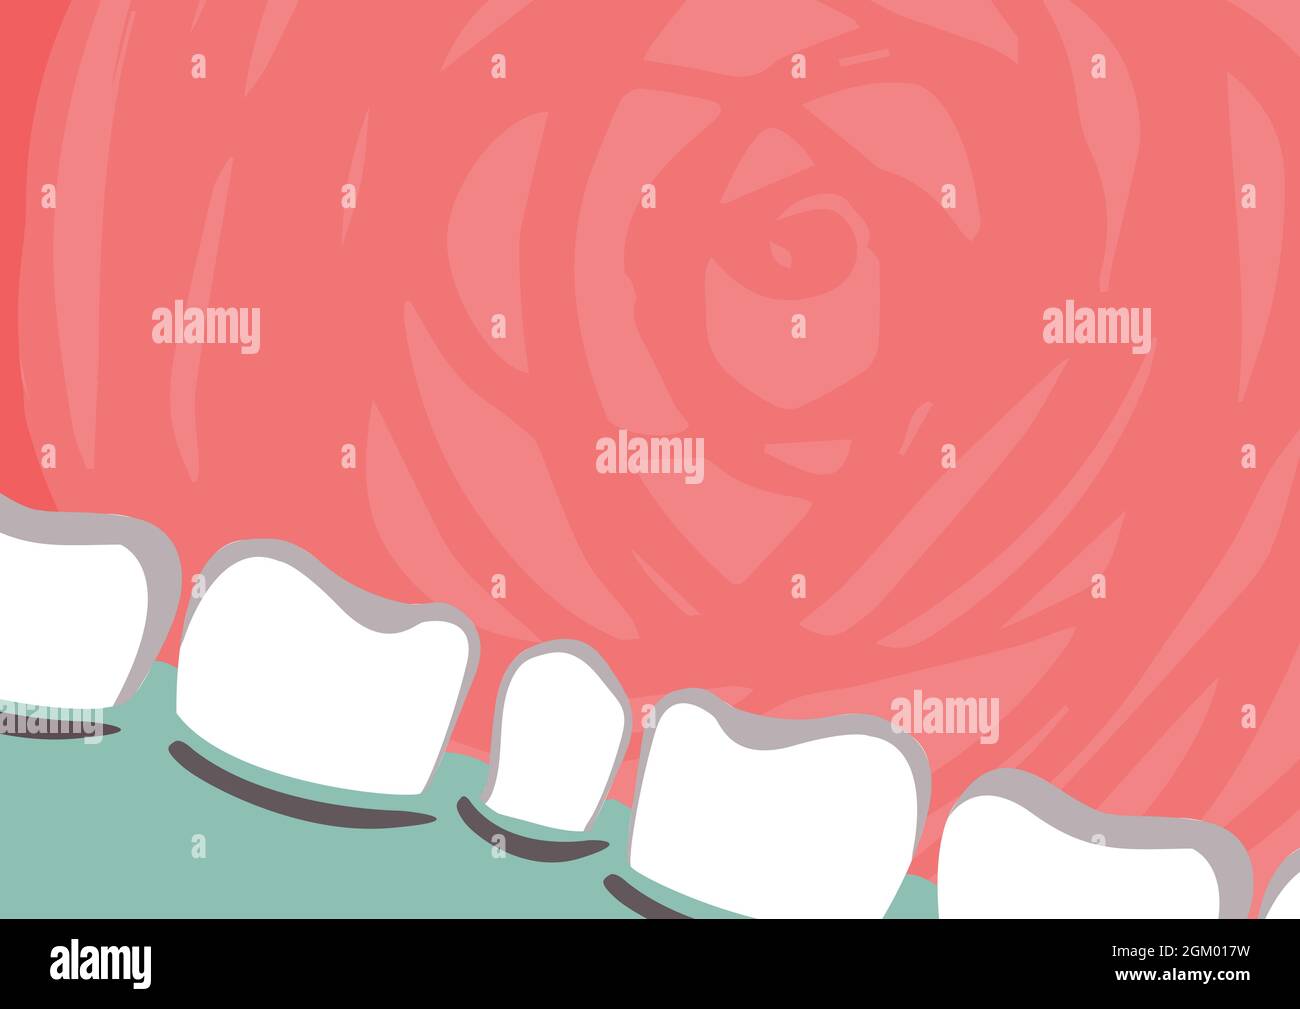 Digitally generated image of teeth icons against textured orange background Stock Photo